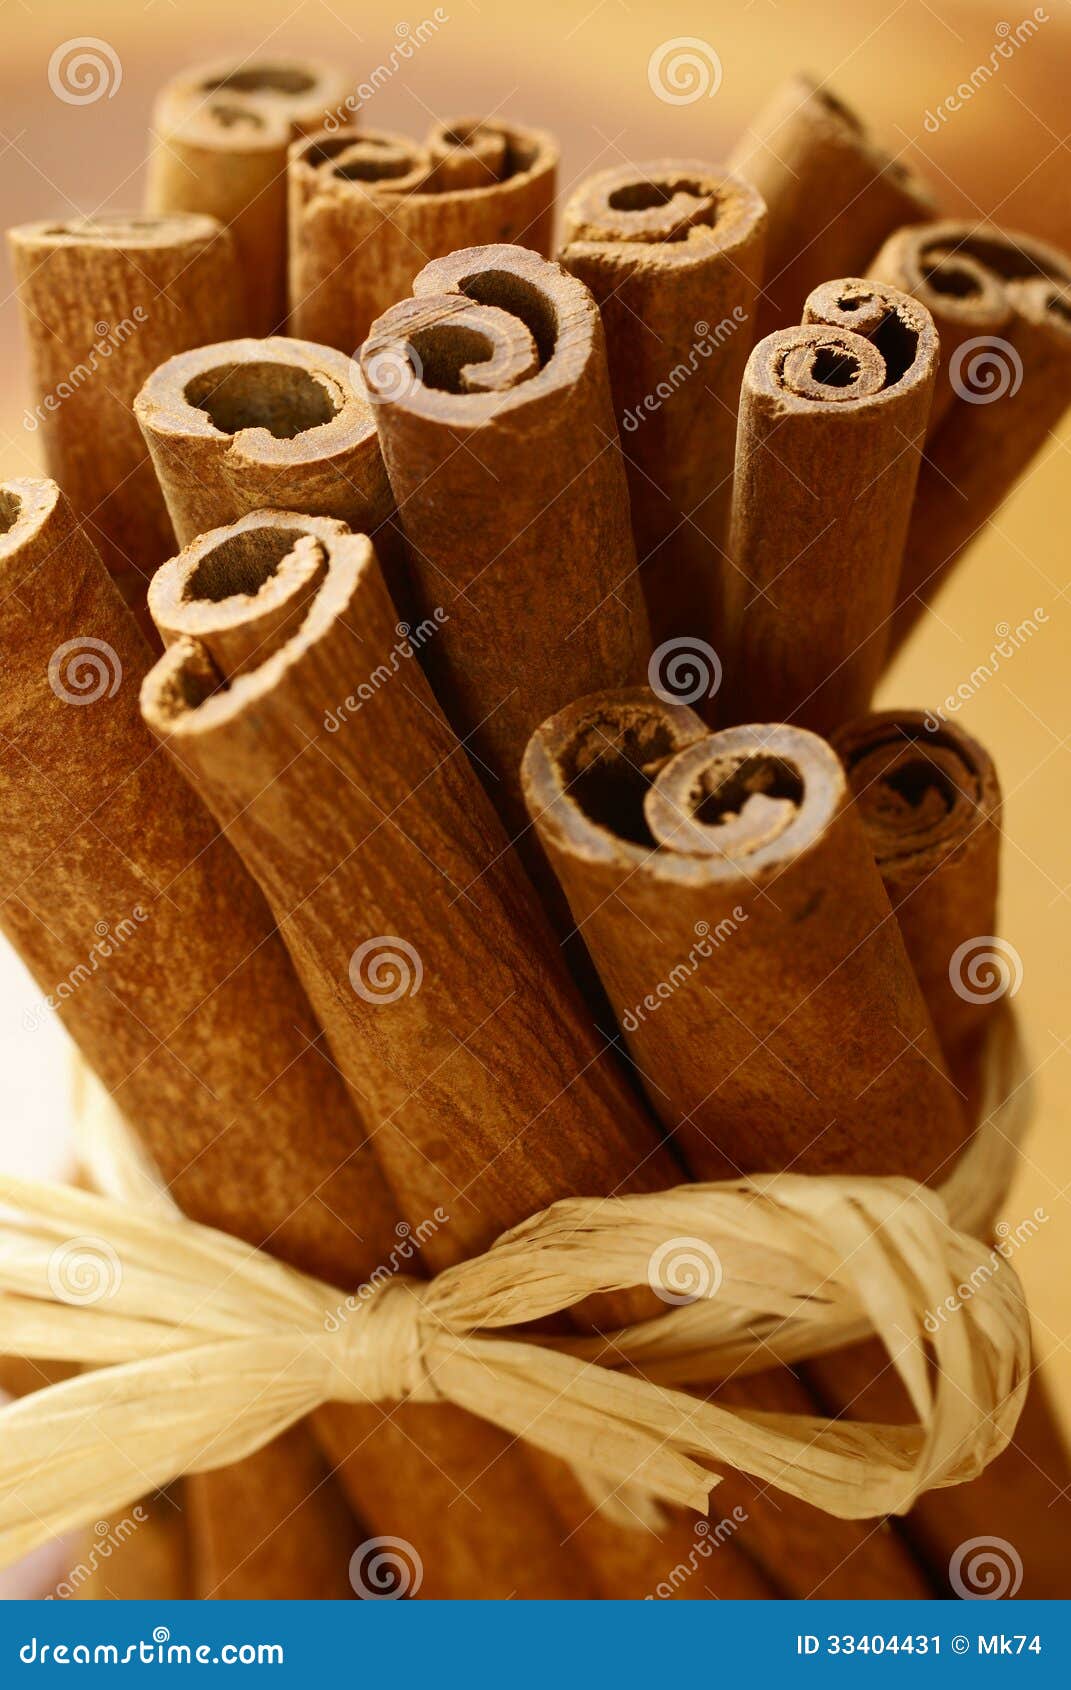 Cinnamone sticks stock image. Image of food, bunch, cinnamon - 33404431